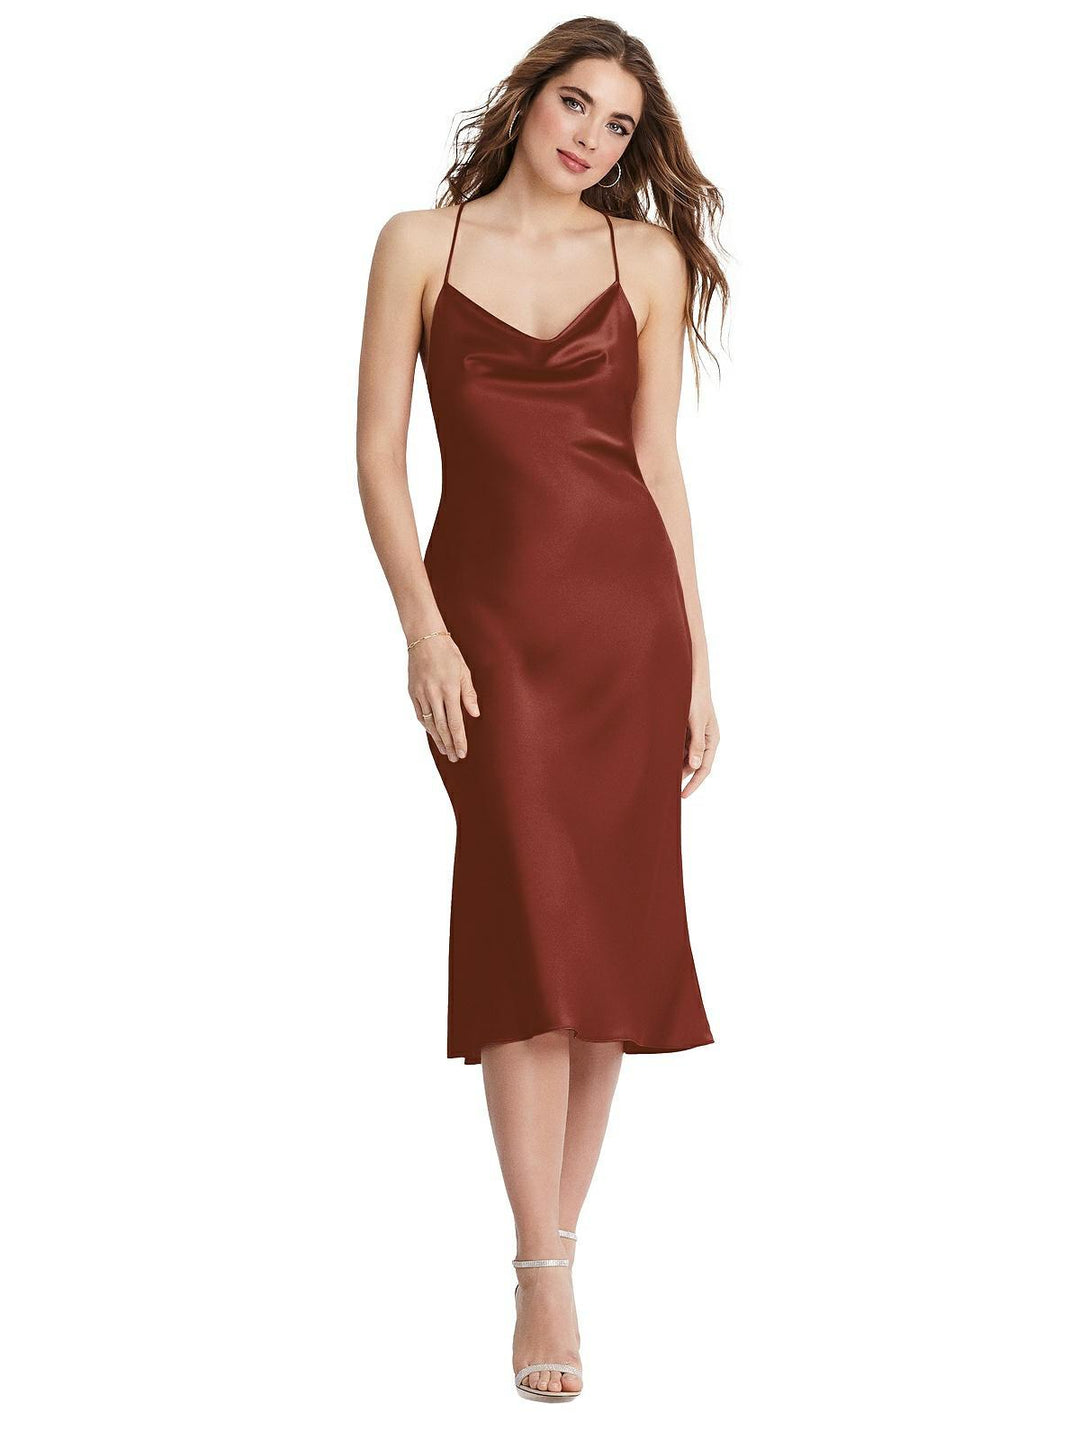 Cowl-Neck Convertible Midi Slip Dress by Dessy Style LB001 Size M